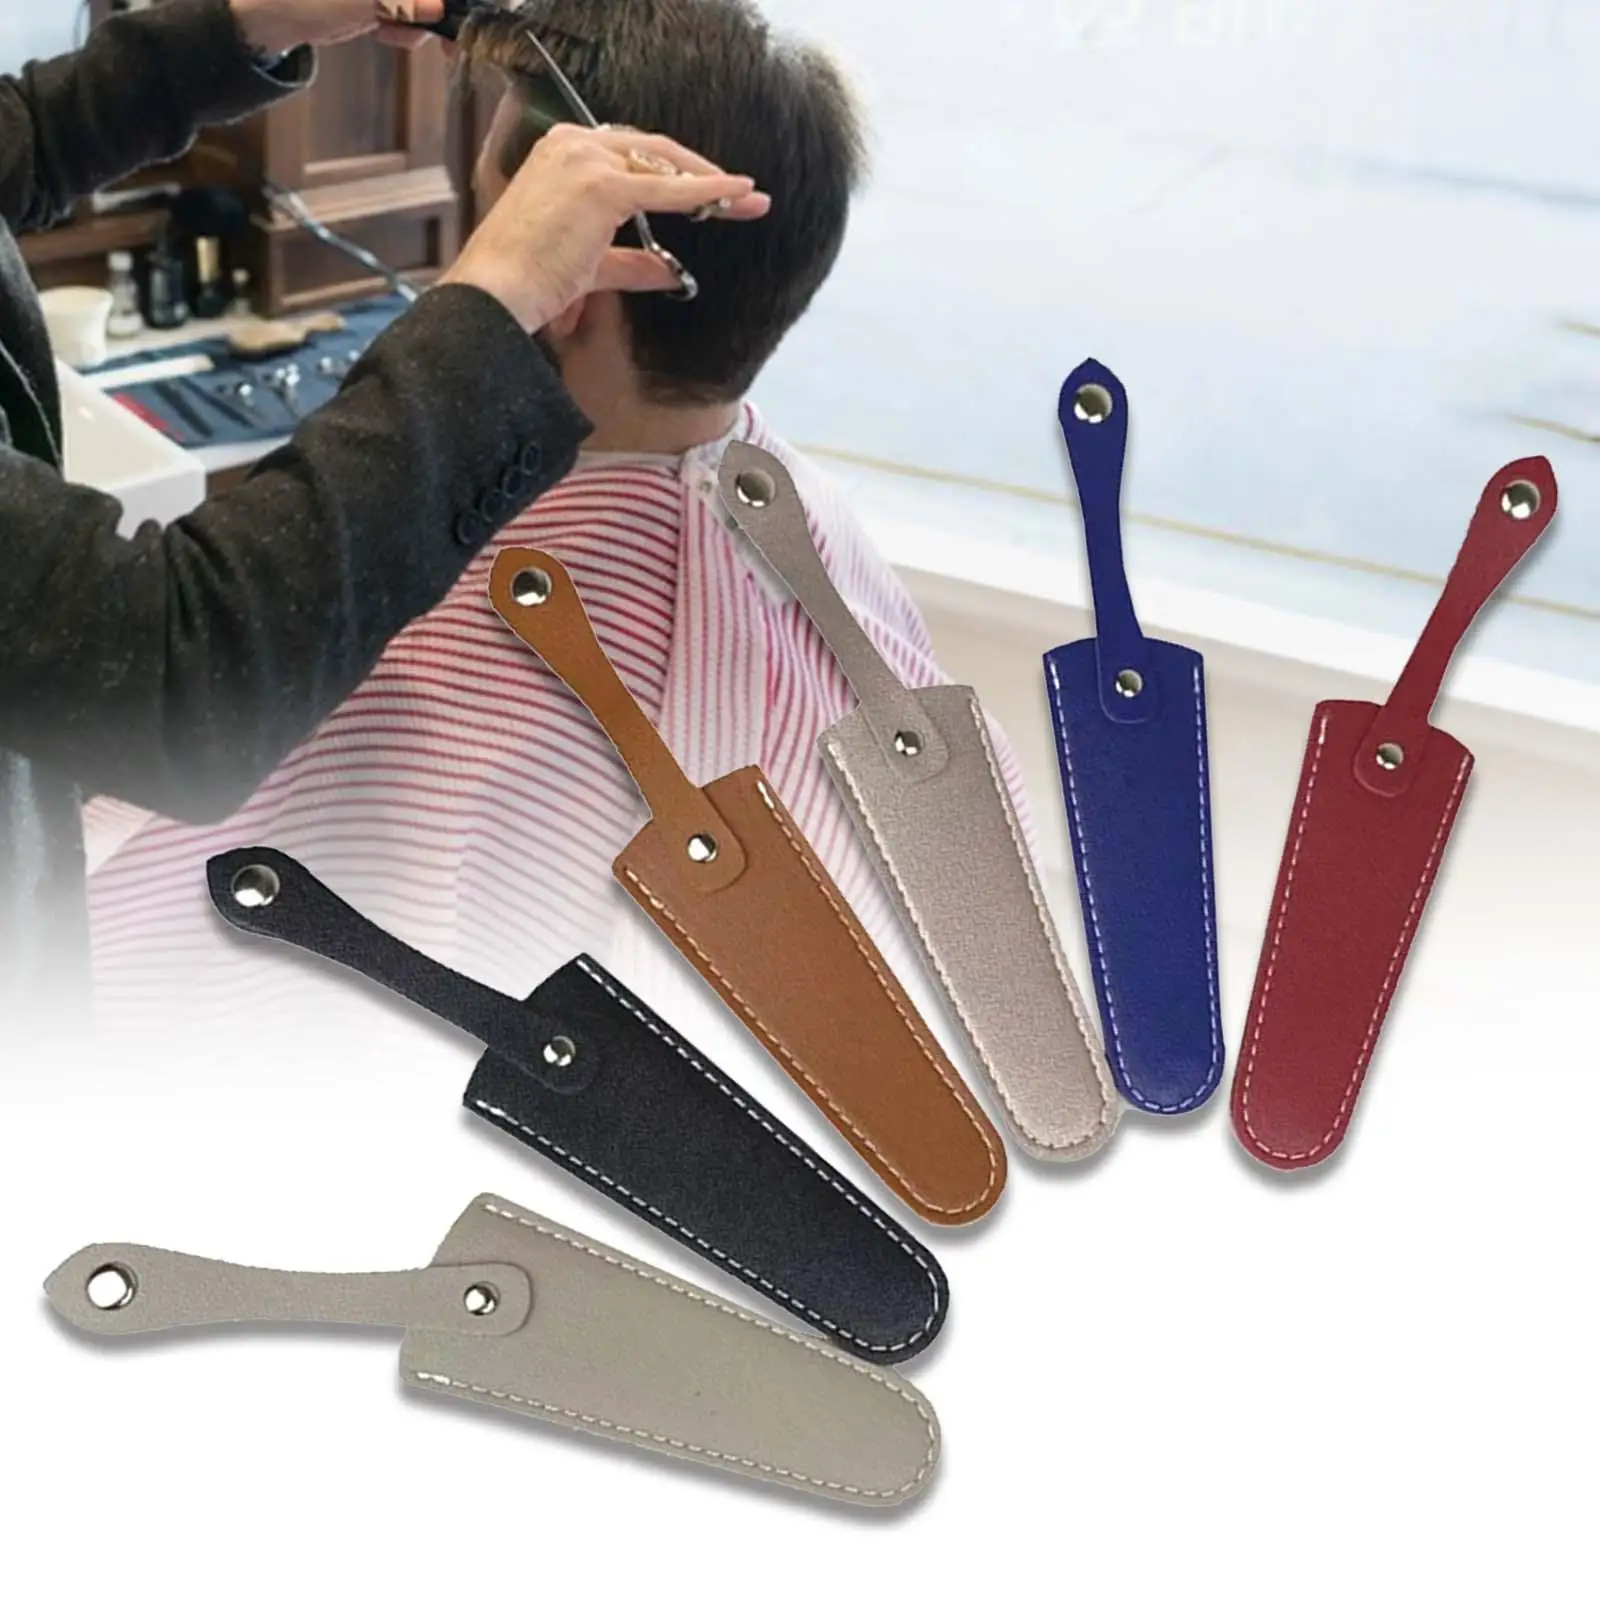 6Pcs Scissors Sheath Salon Hair Scissor Bag for Embroidery Hairdressers